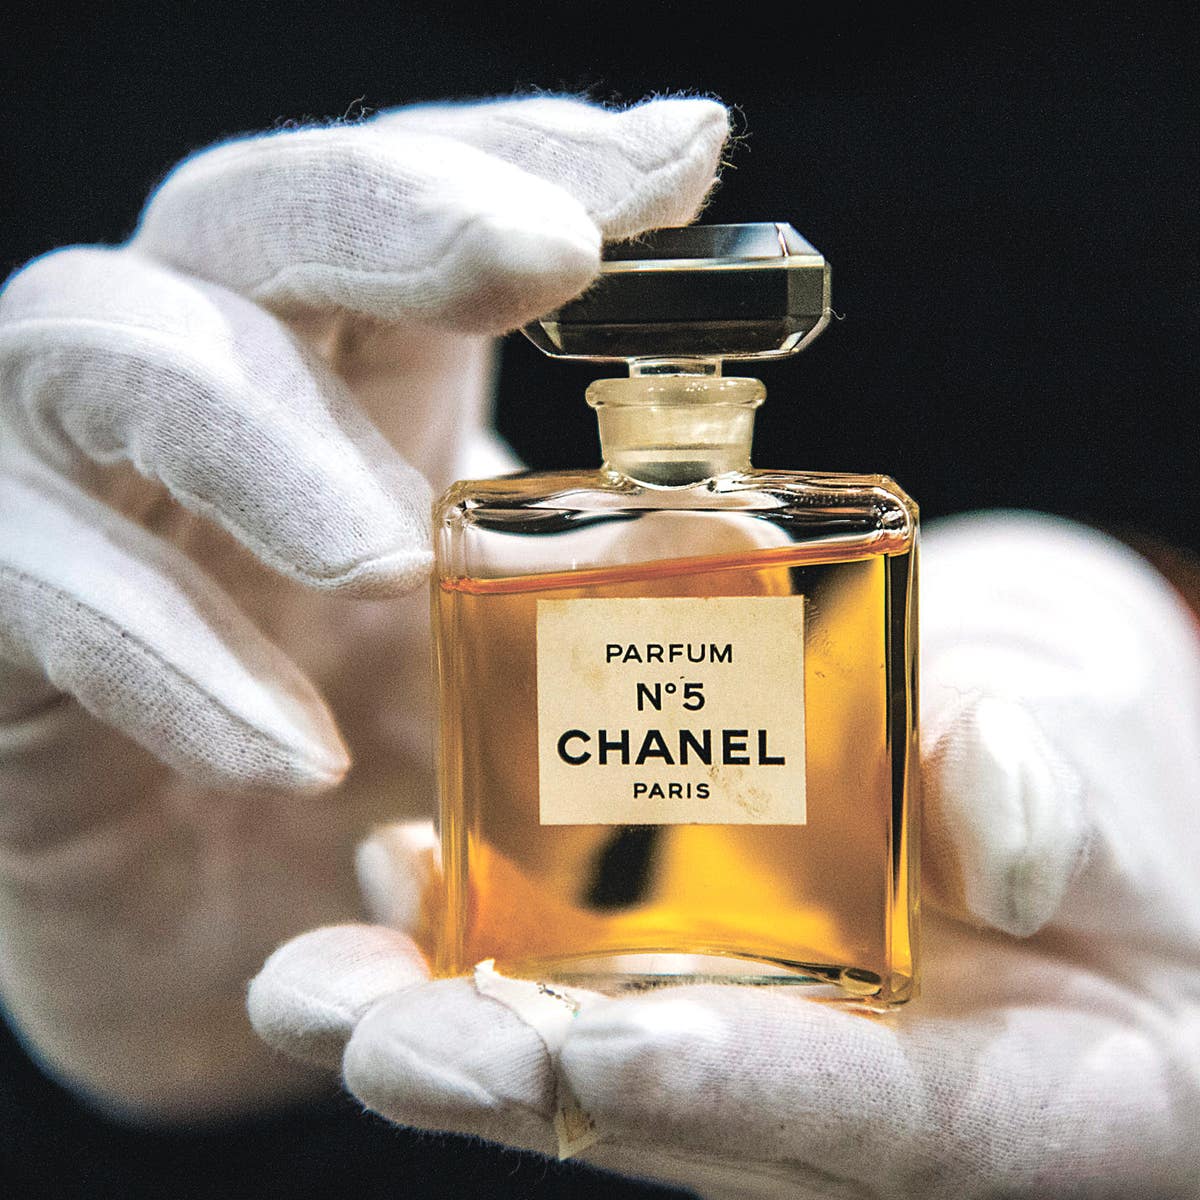 Chanel no.5 Perfume